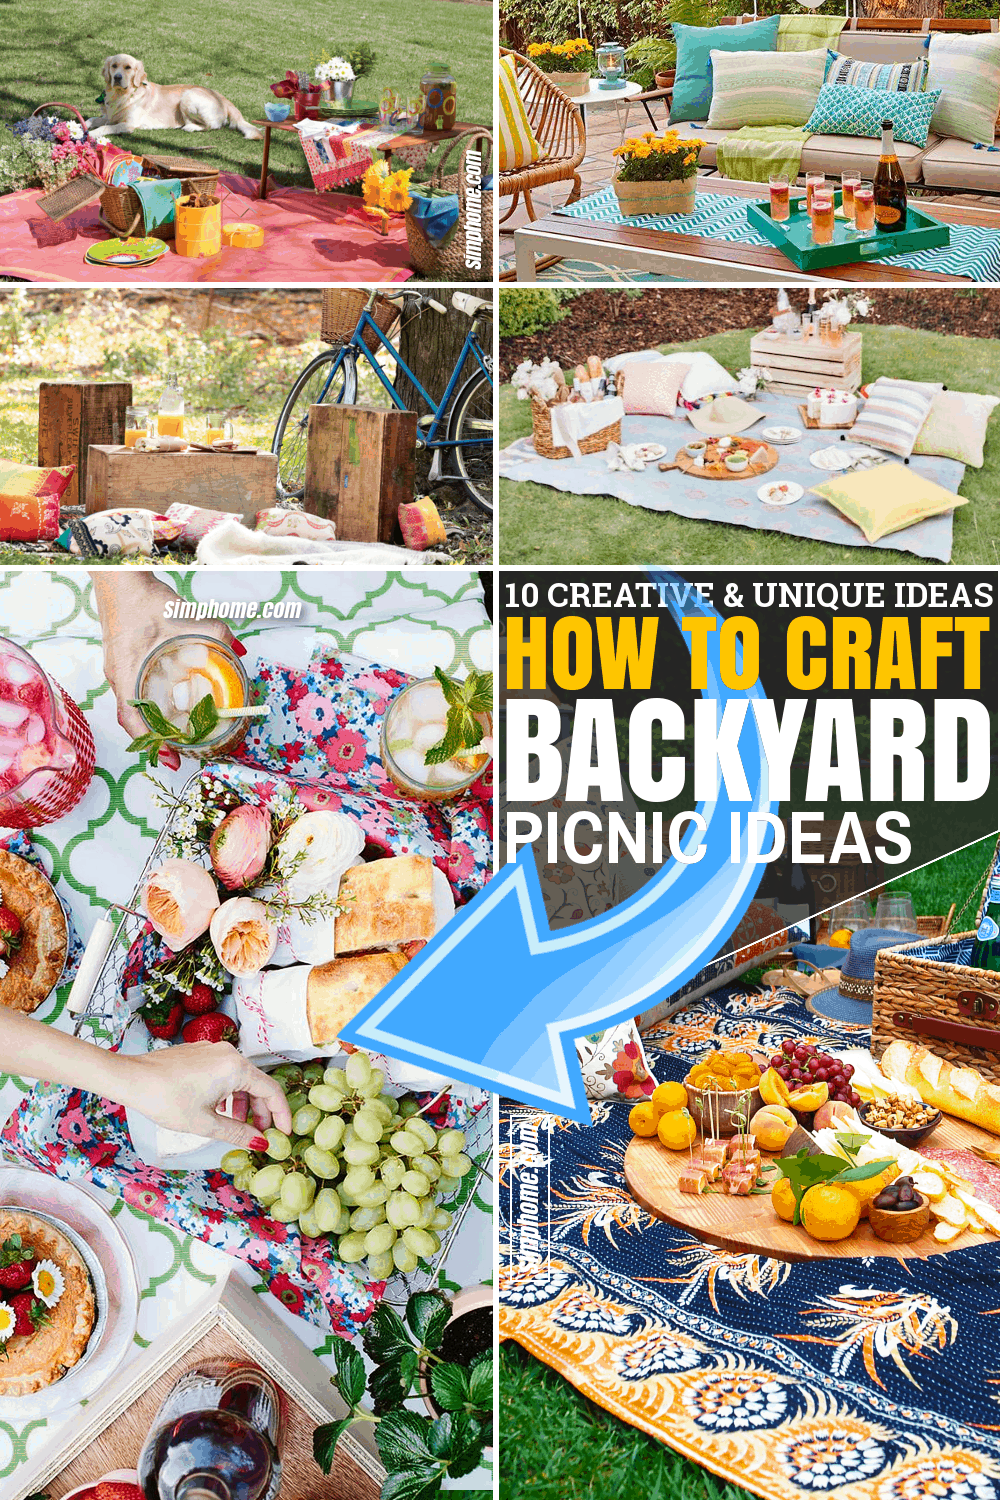 SIMPHOME.COM 10 Ideas how to craft backyard picnic ideas Featured Pinterest